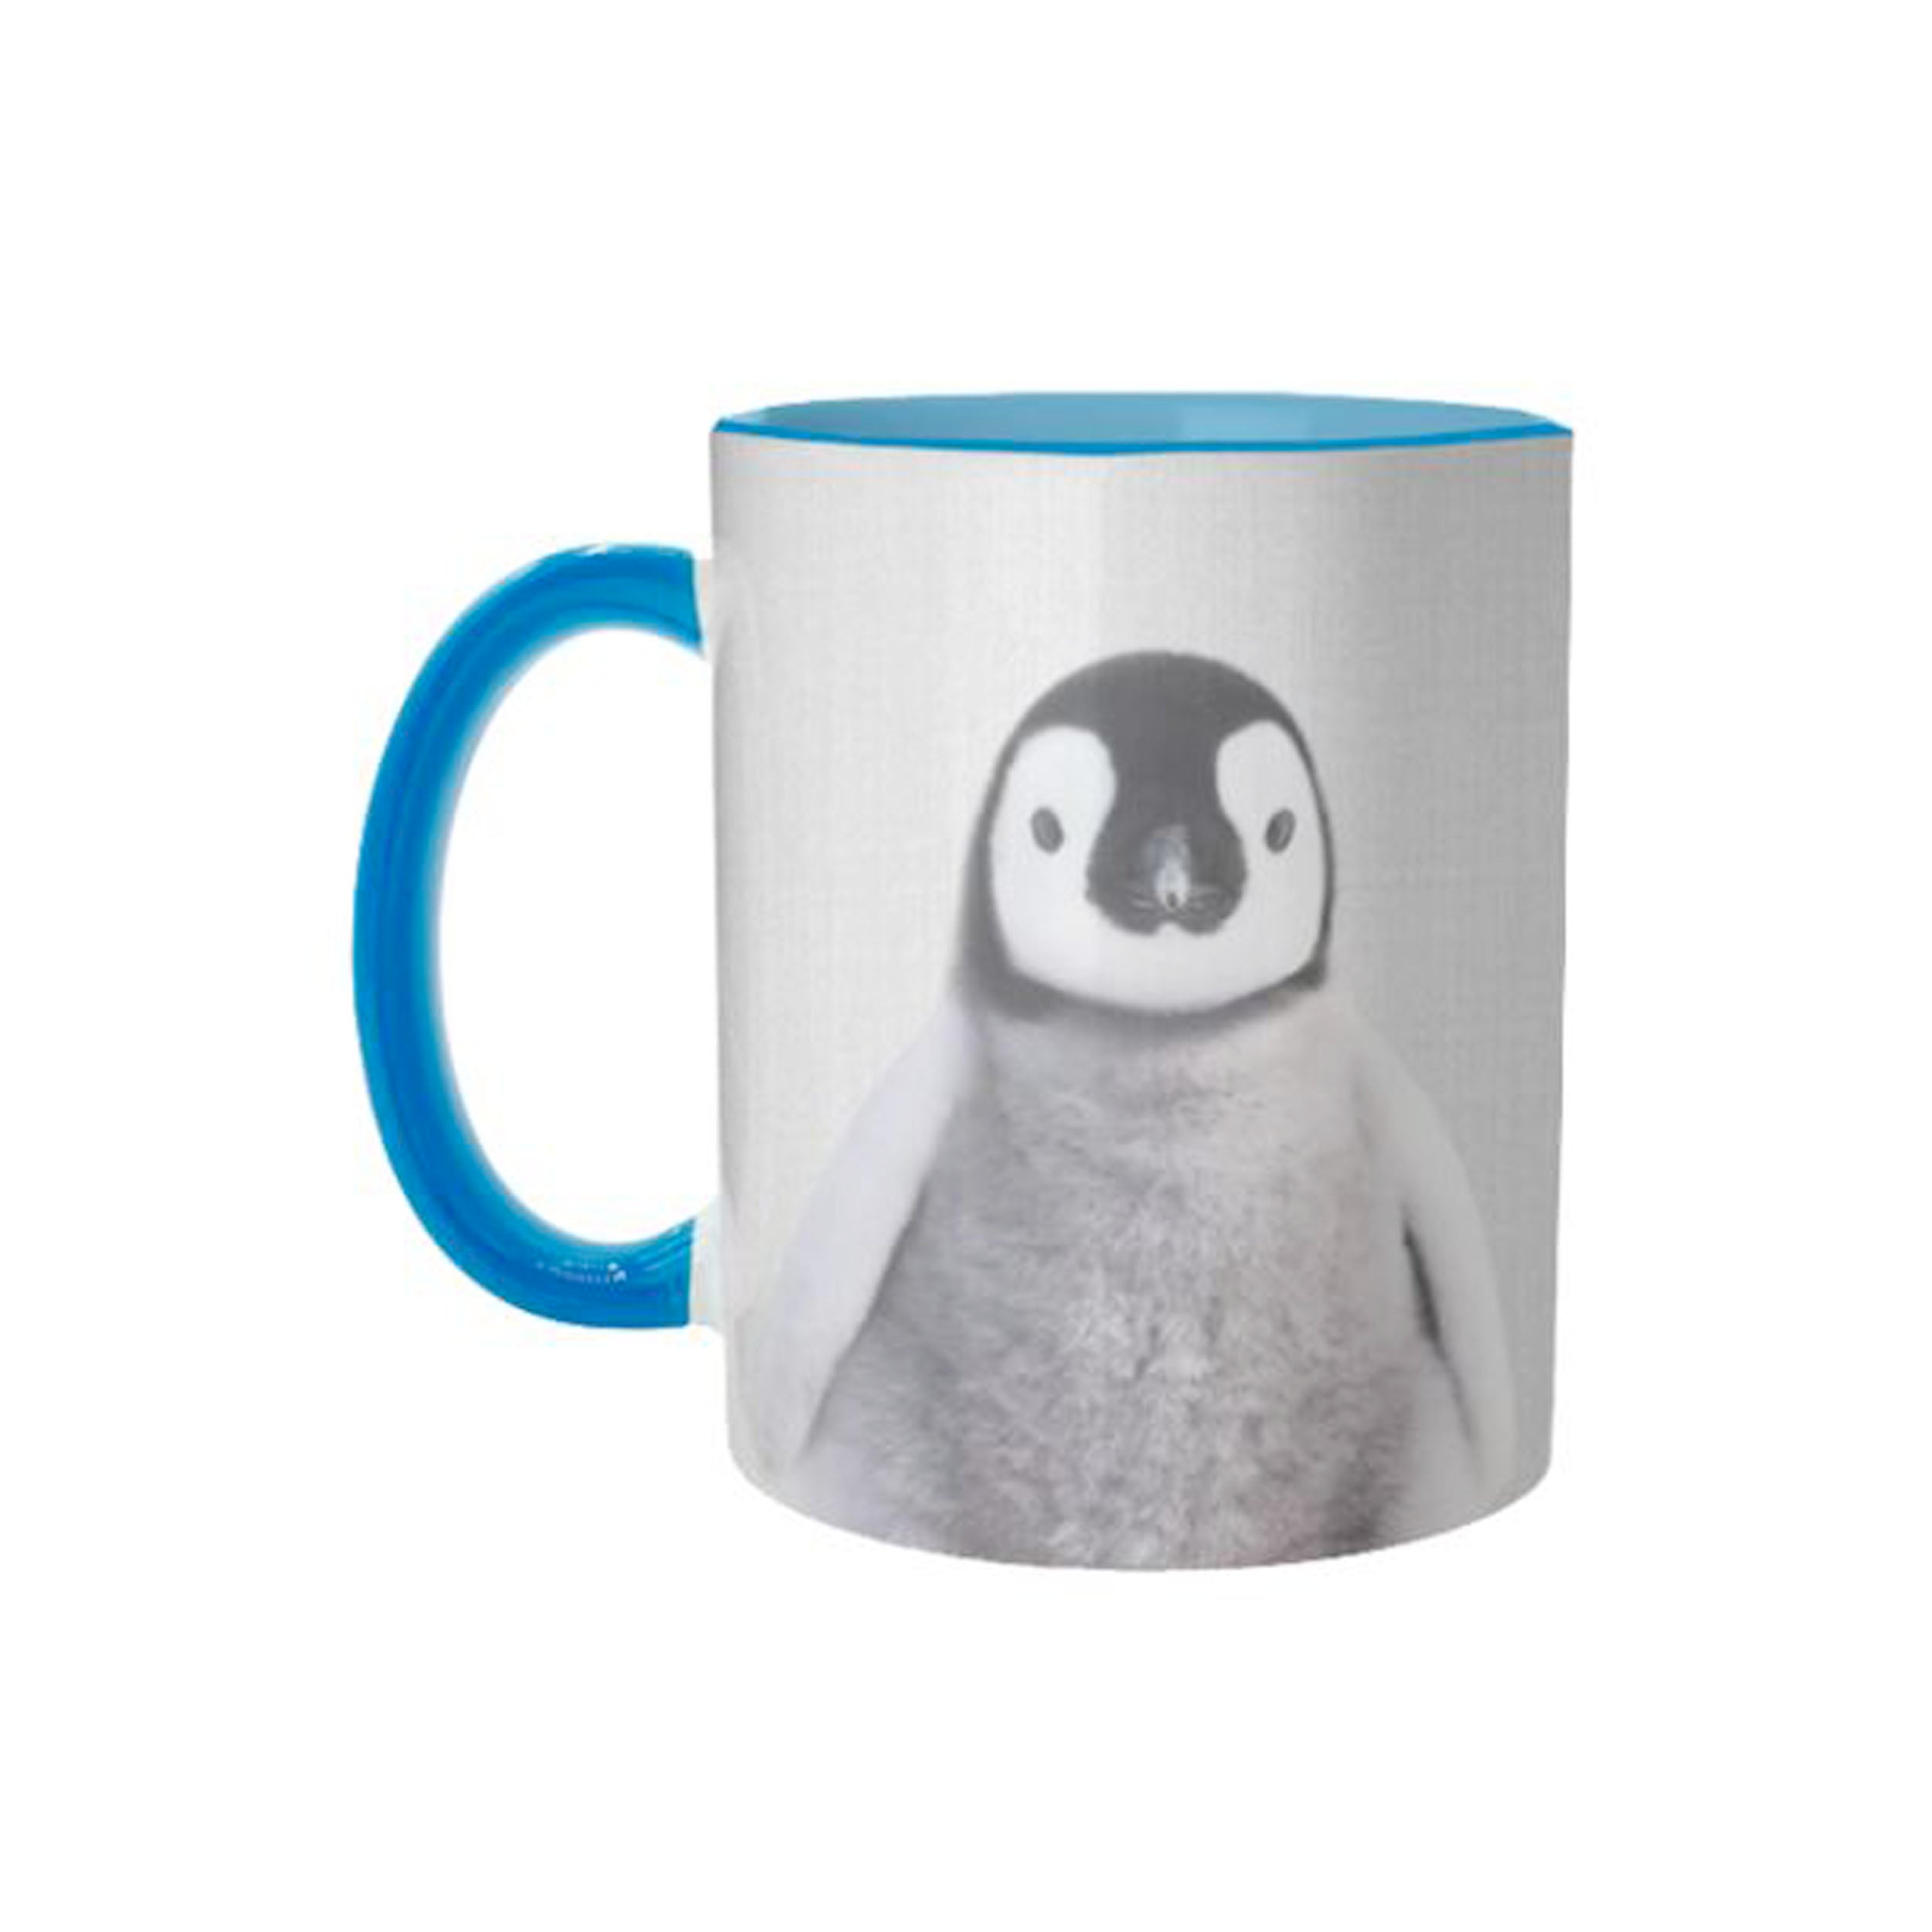 Penguin Prints Panda Mug, Panda Adorable Image Printed On Ceramic